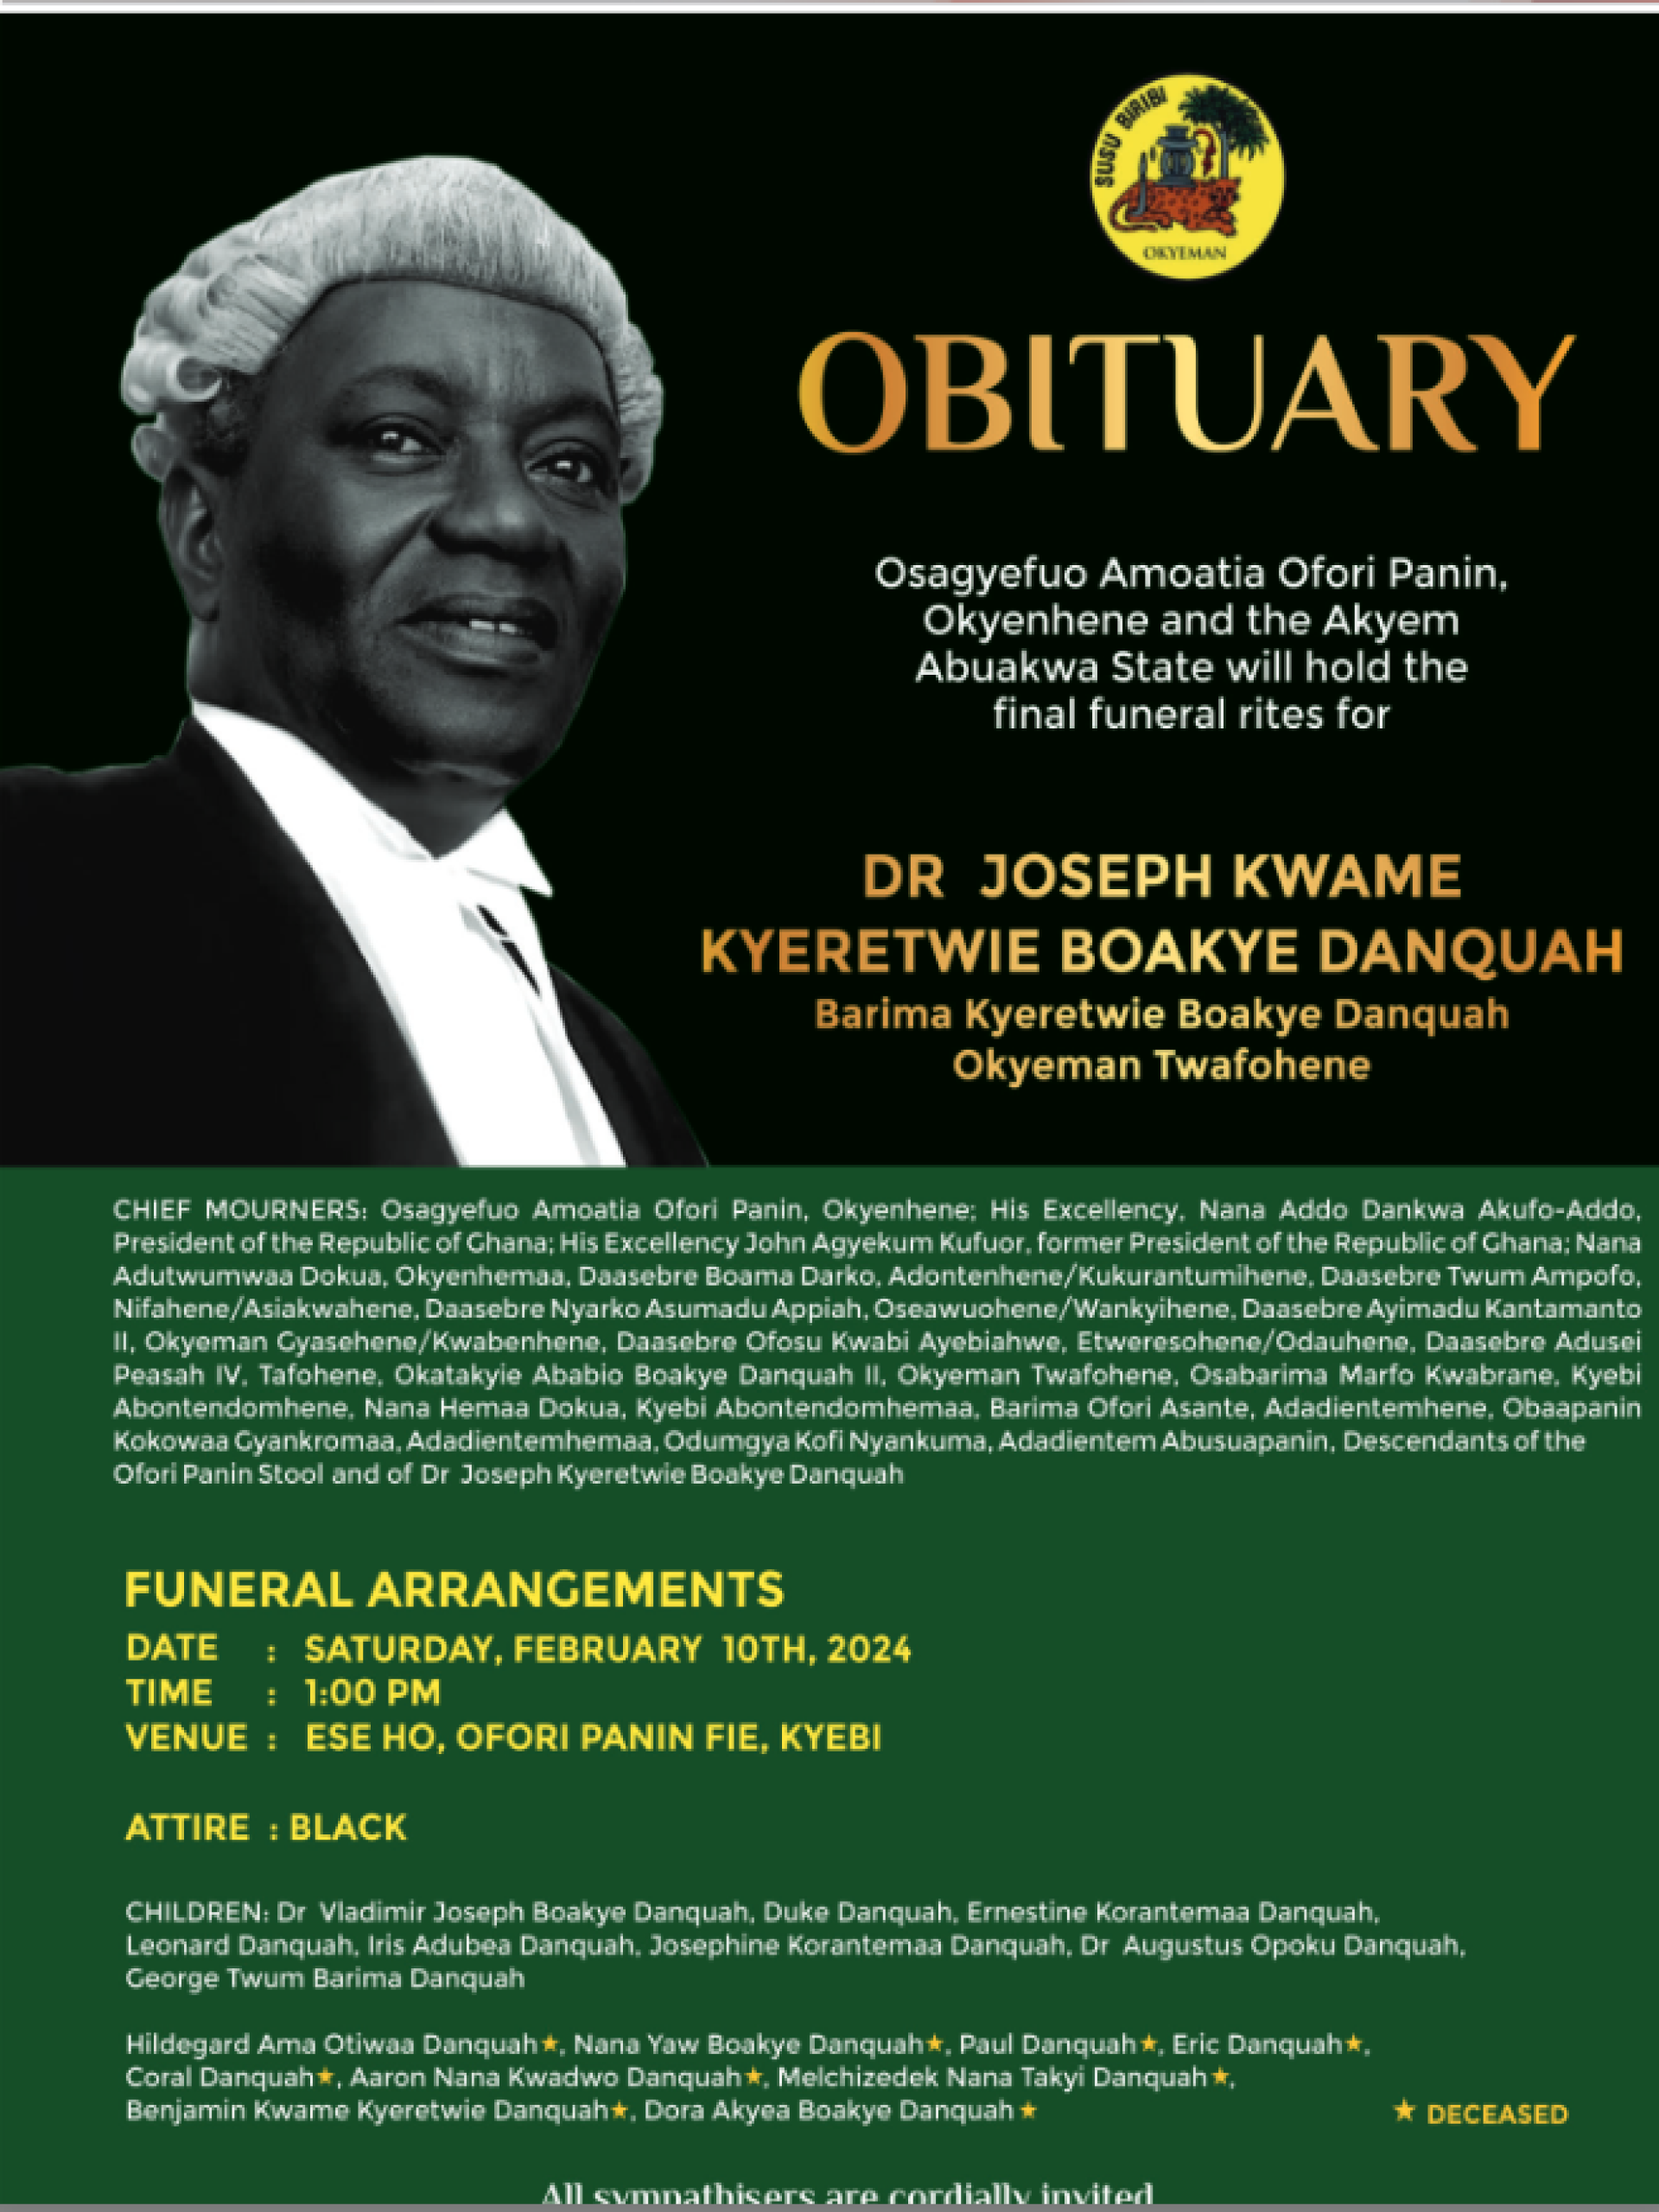 Dr. Joseph Kwame Kyeretwie Boakye Danquah